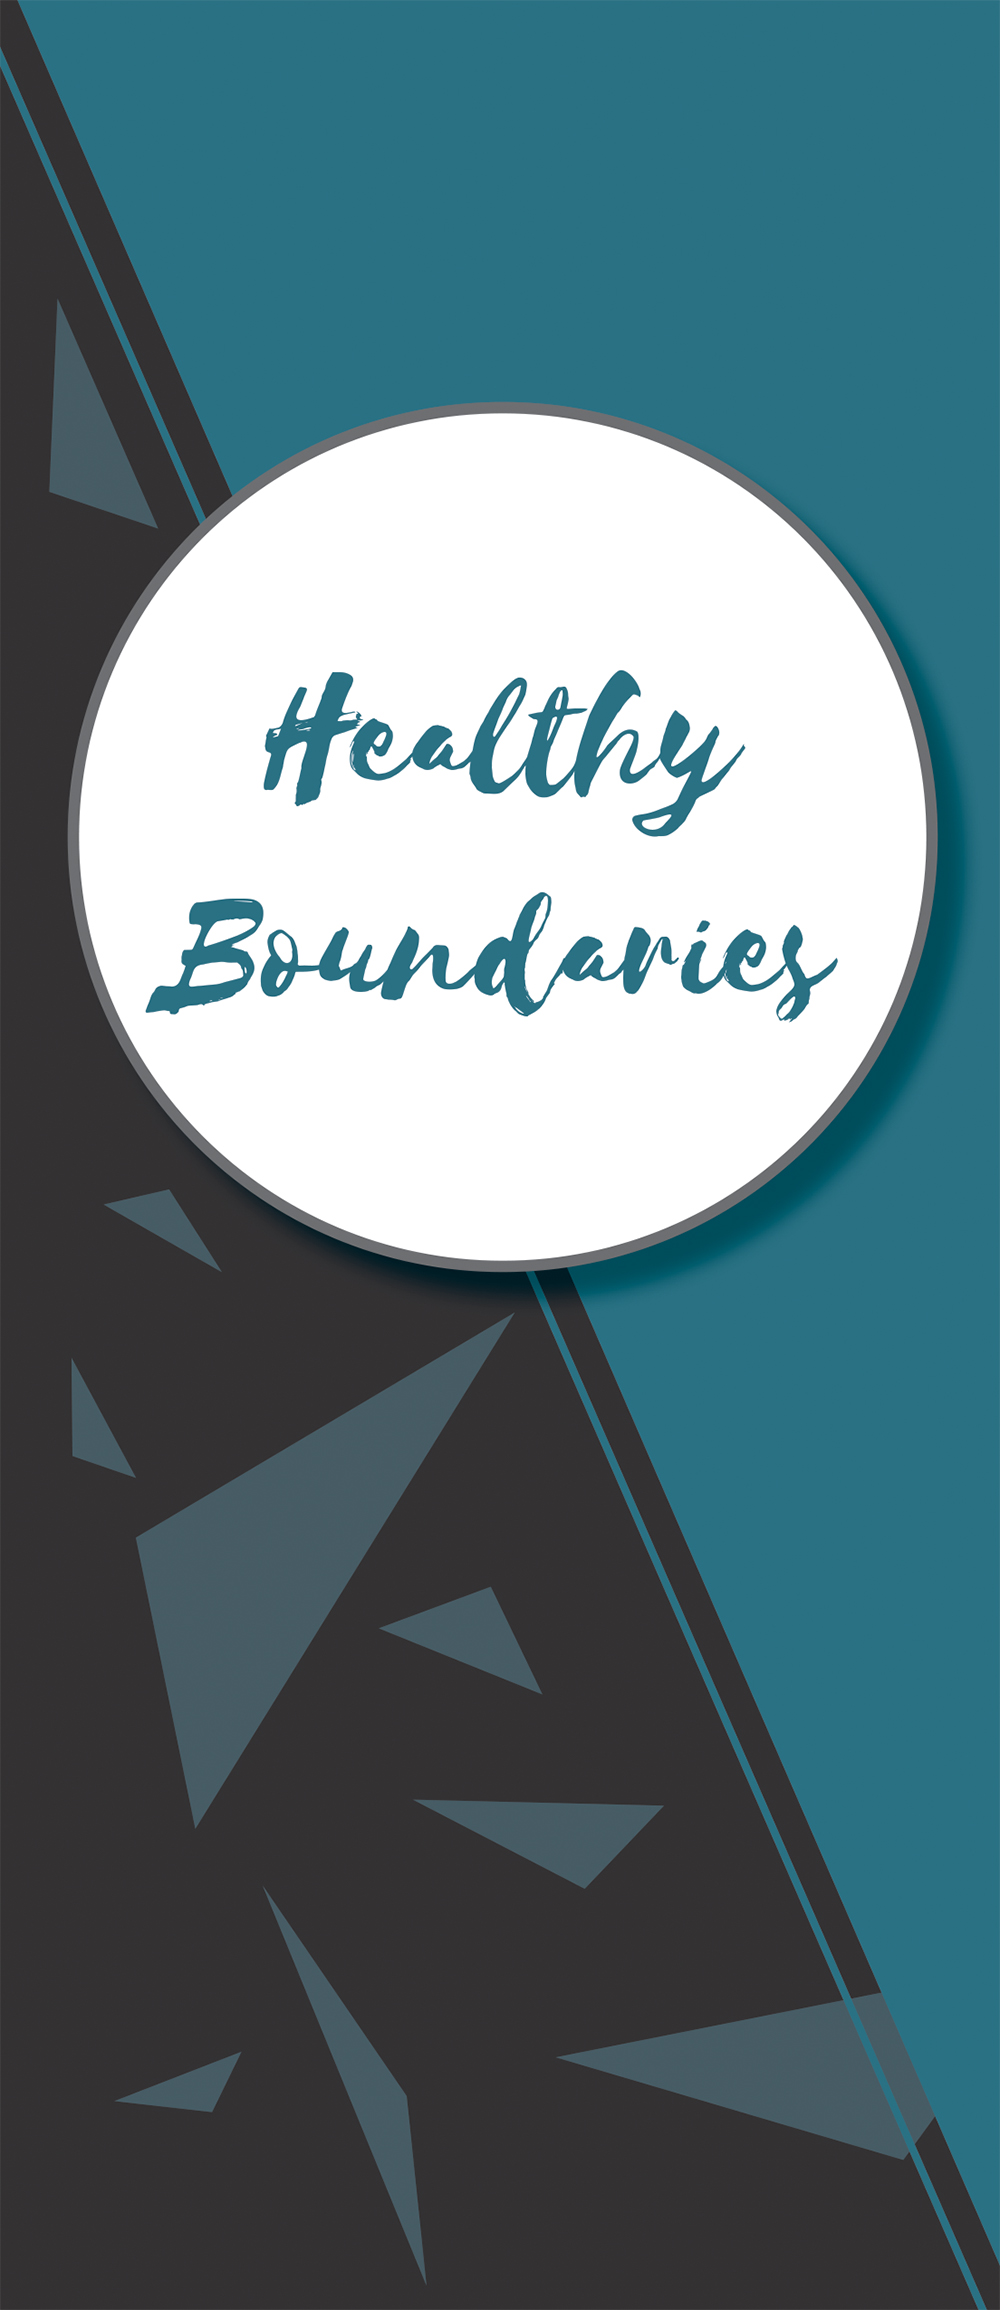 Literature, Healthy Boundaries: 50/pk